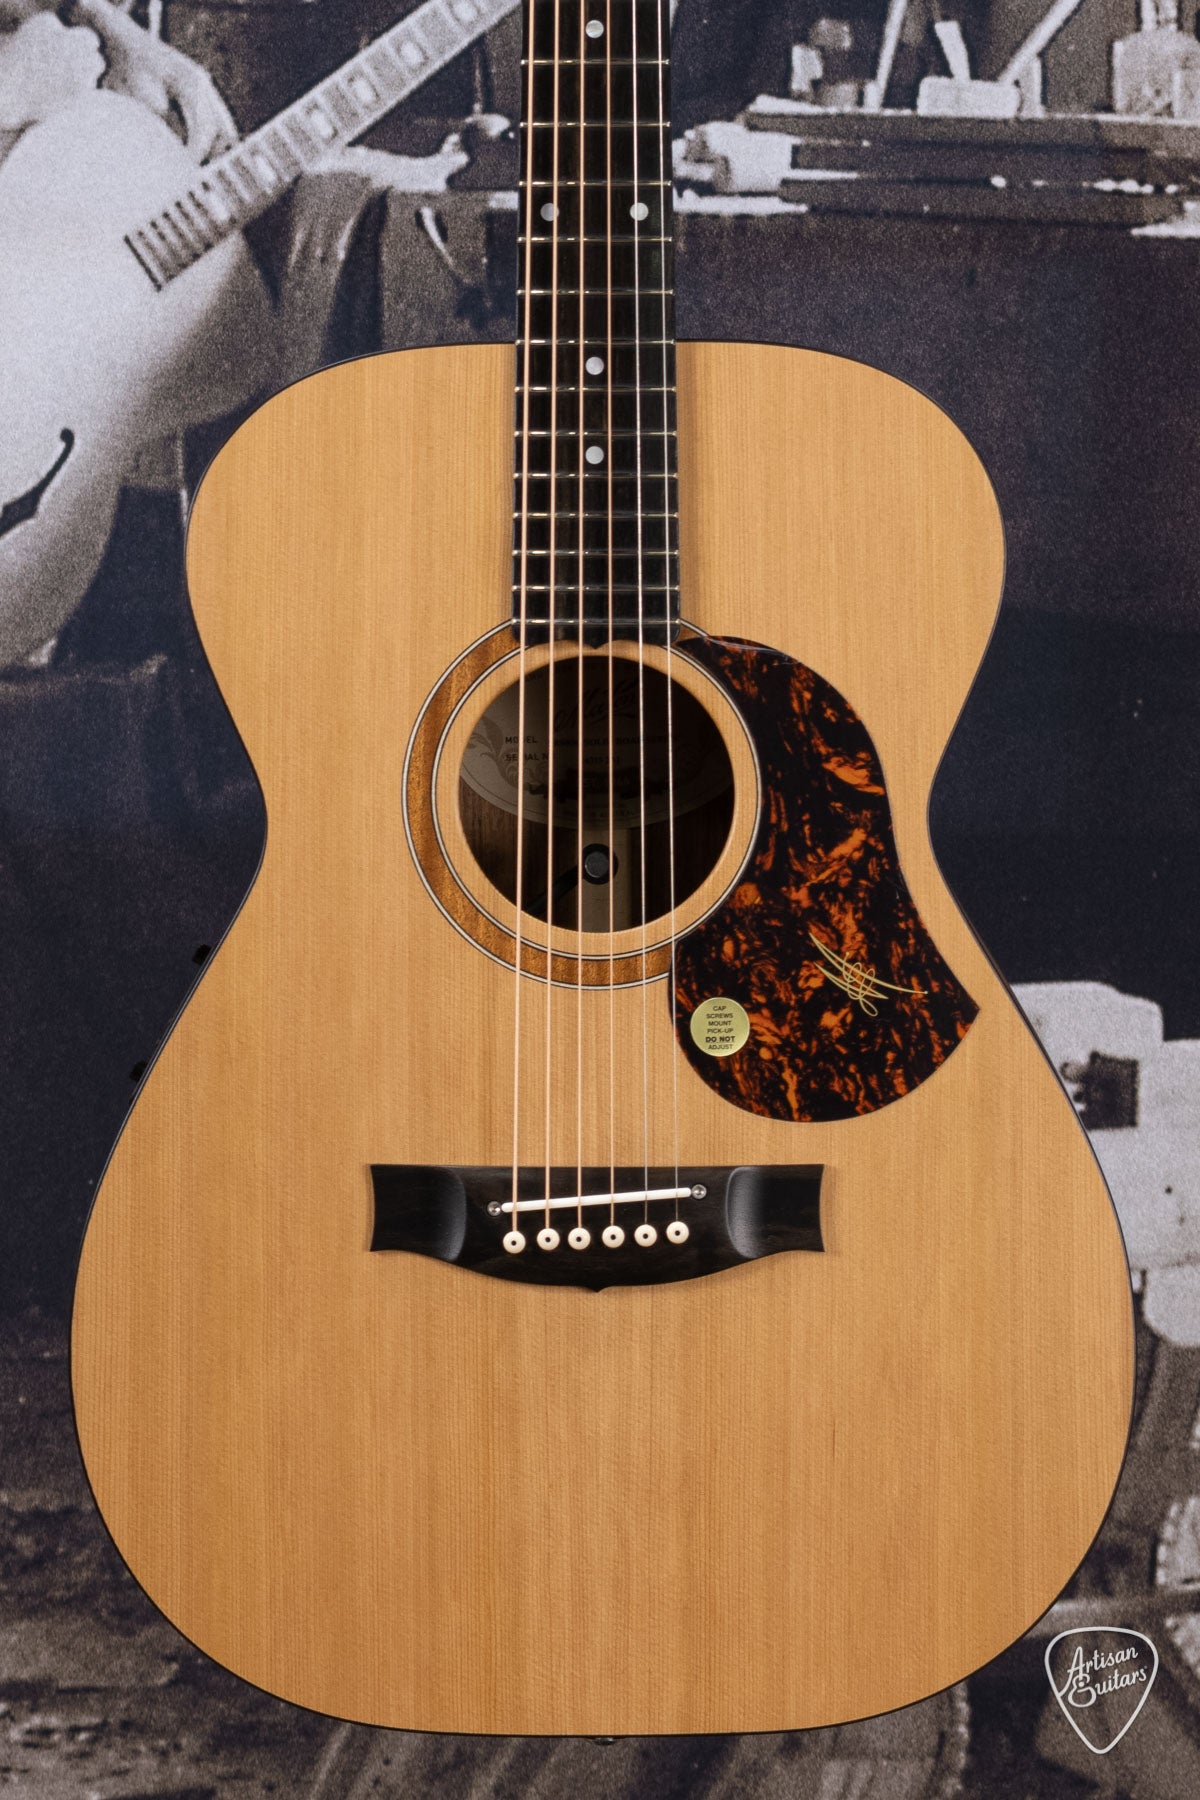 Maton Guitars Solid Road Series SRS-808 - 16202